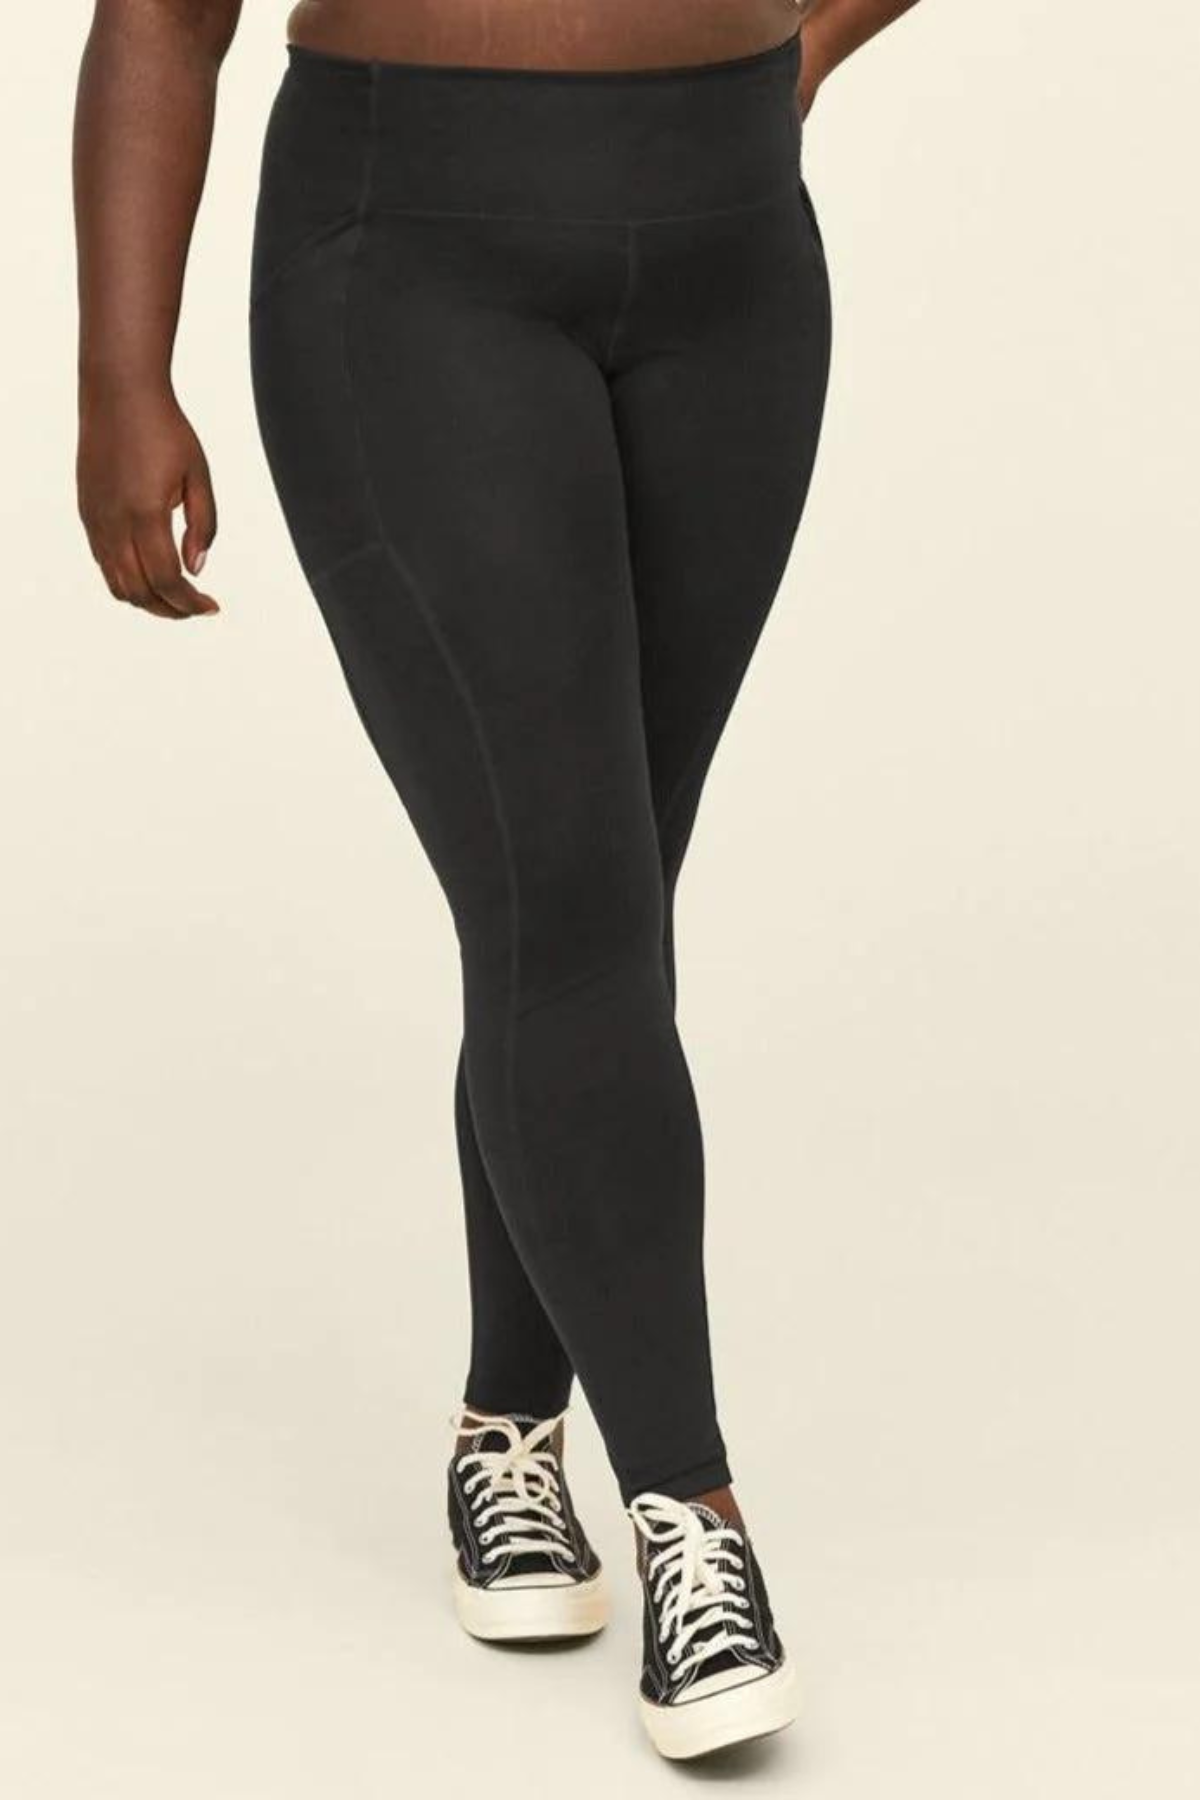 Girlfriend Collective Black Compressive High-Rise Legging size